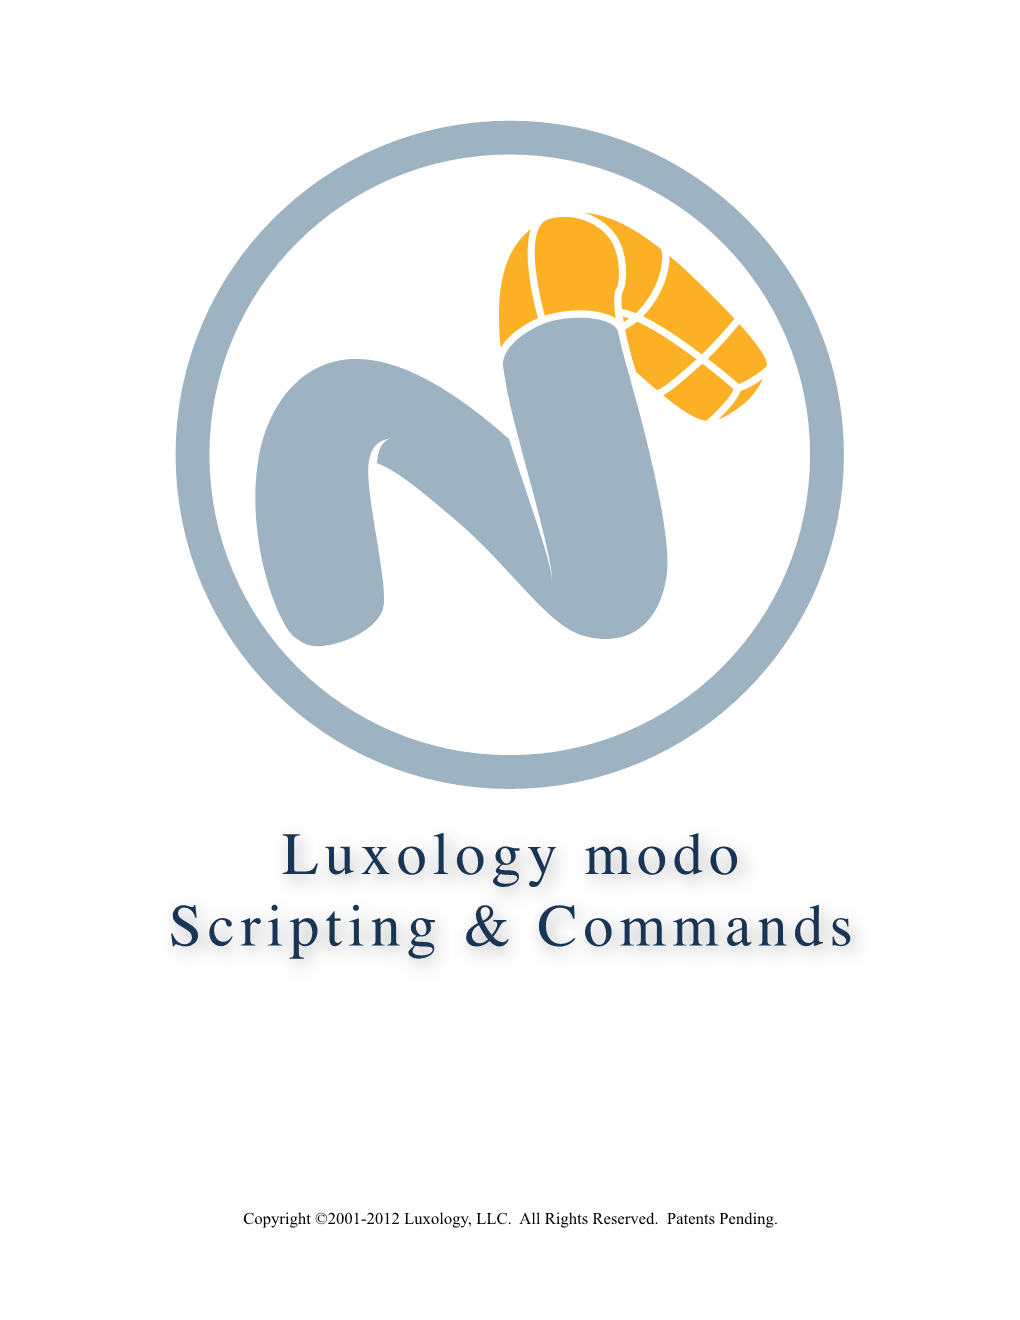 Luxology Modo Scripting & Commands